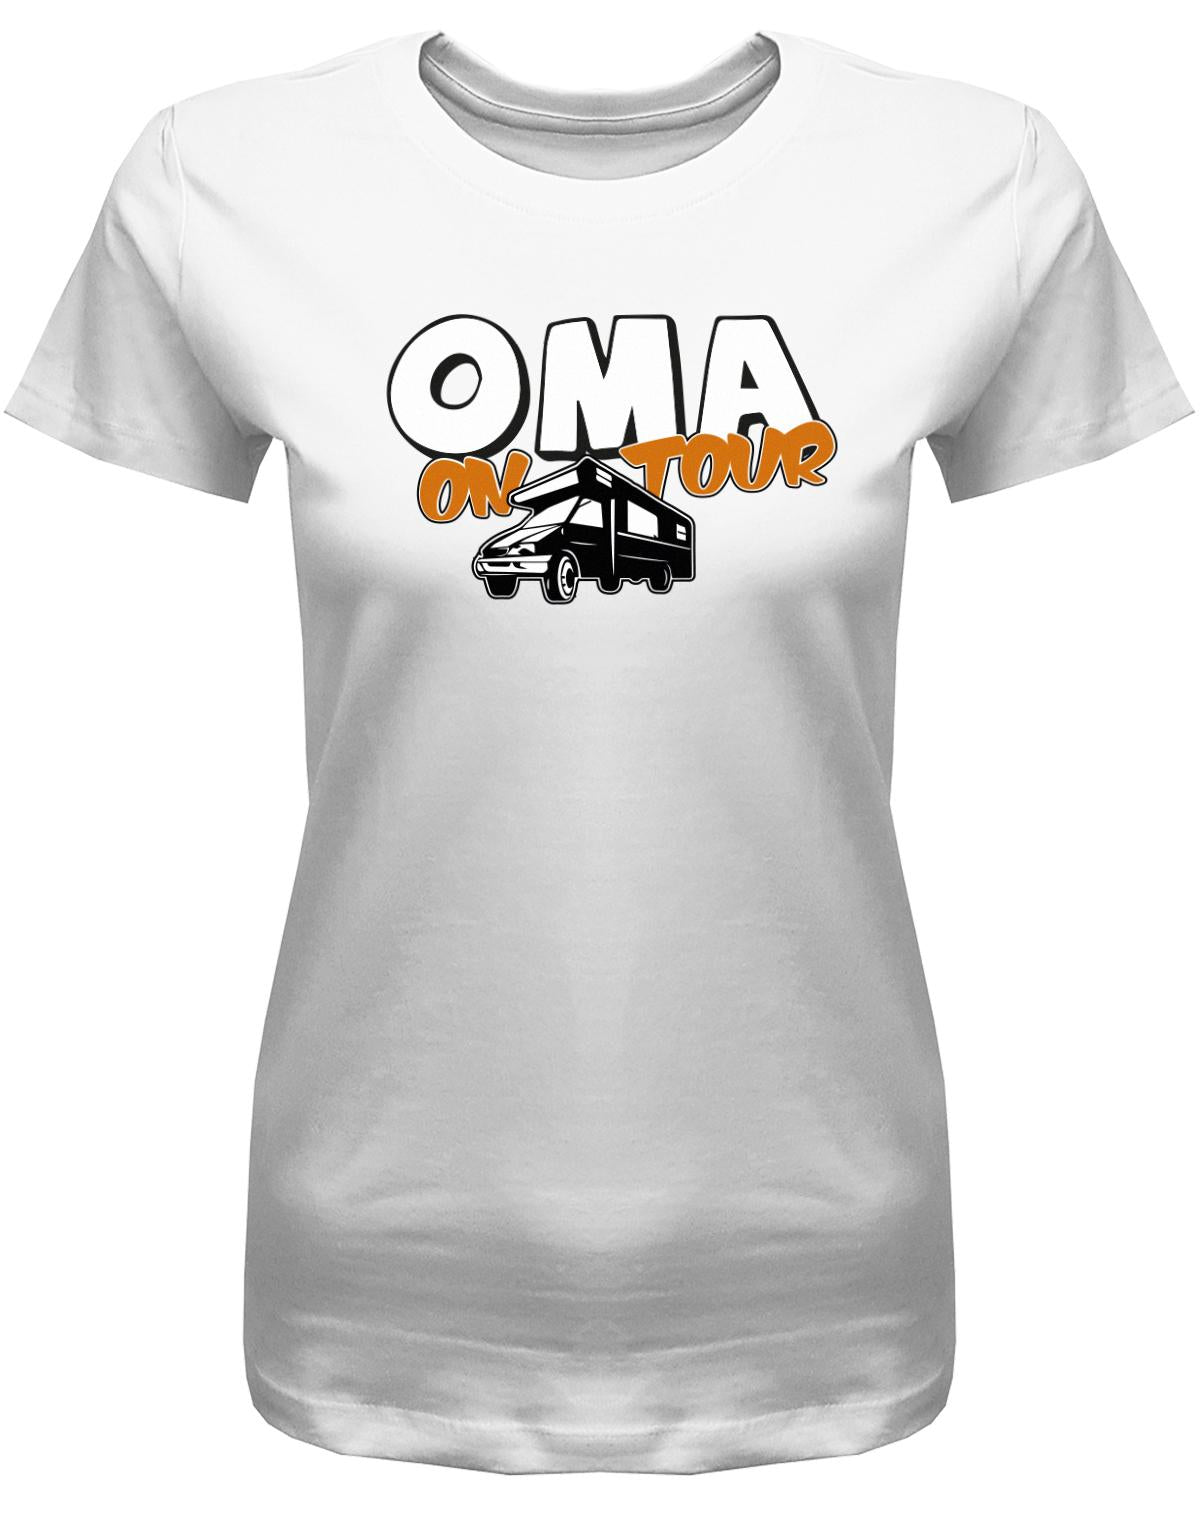 Oma-on-Tour-Camping-Damen-Shirt-weiss